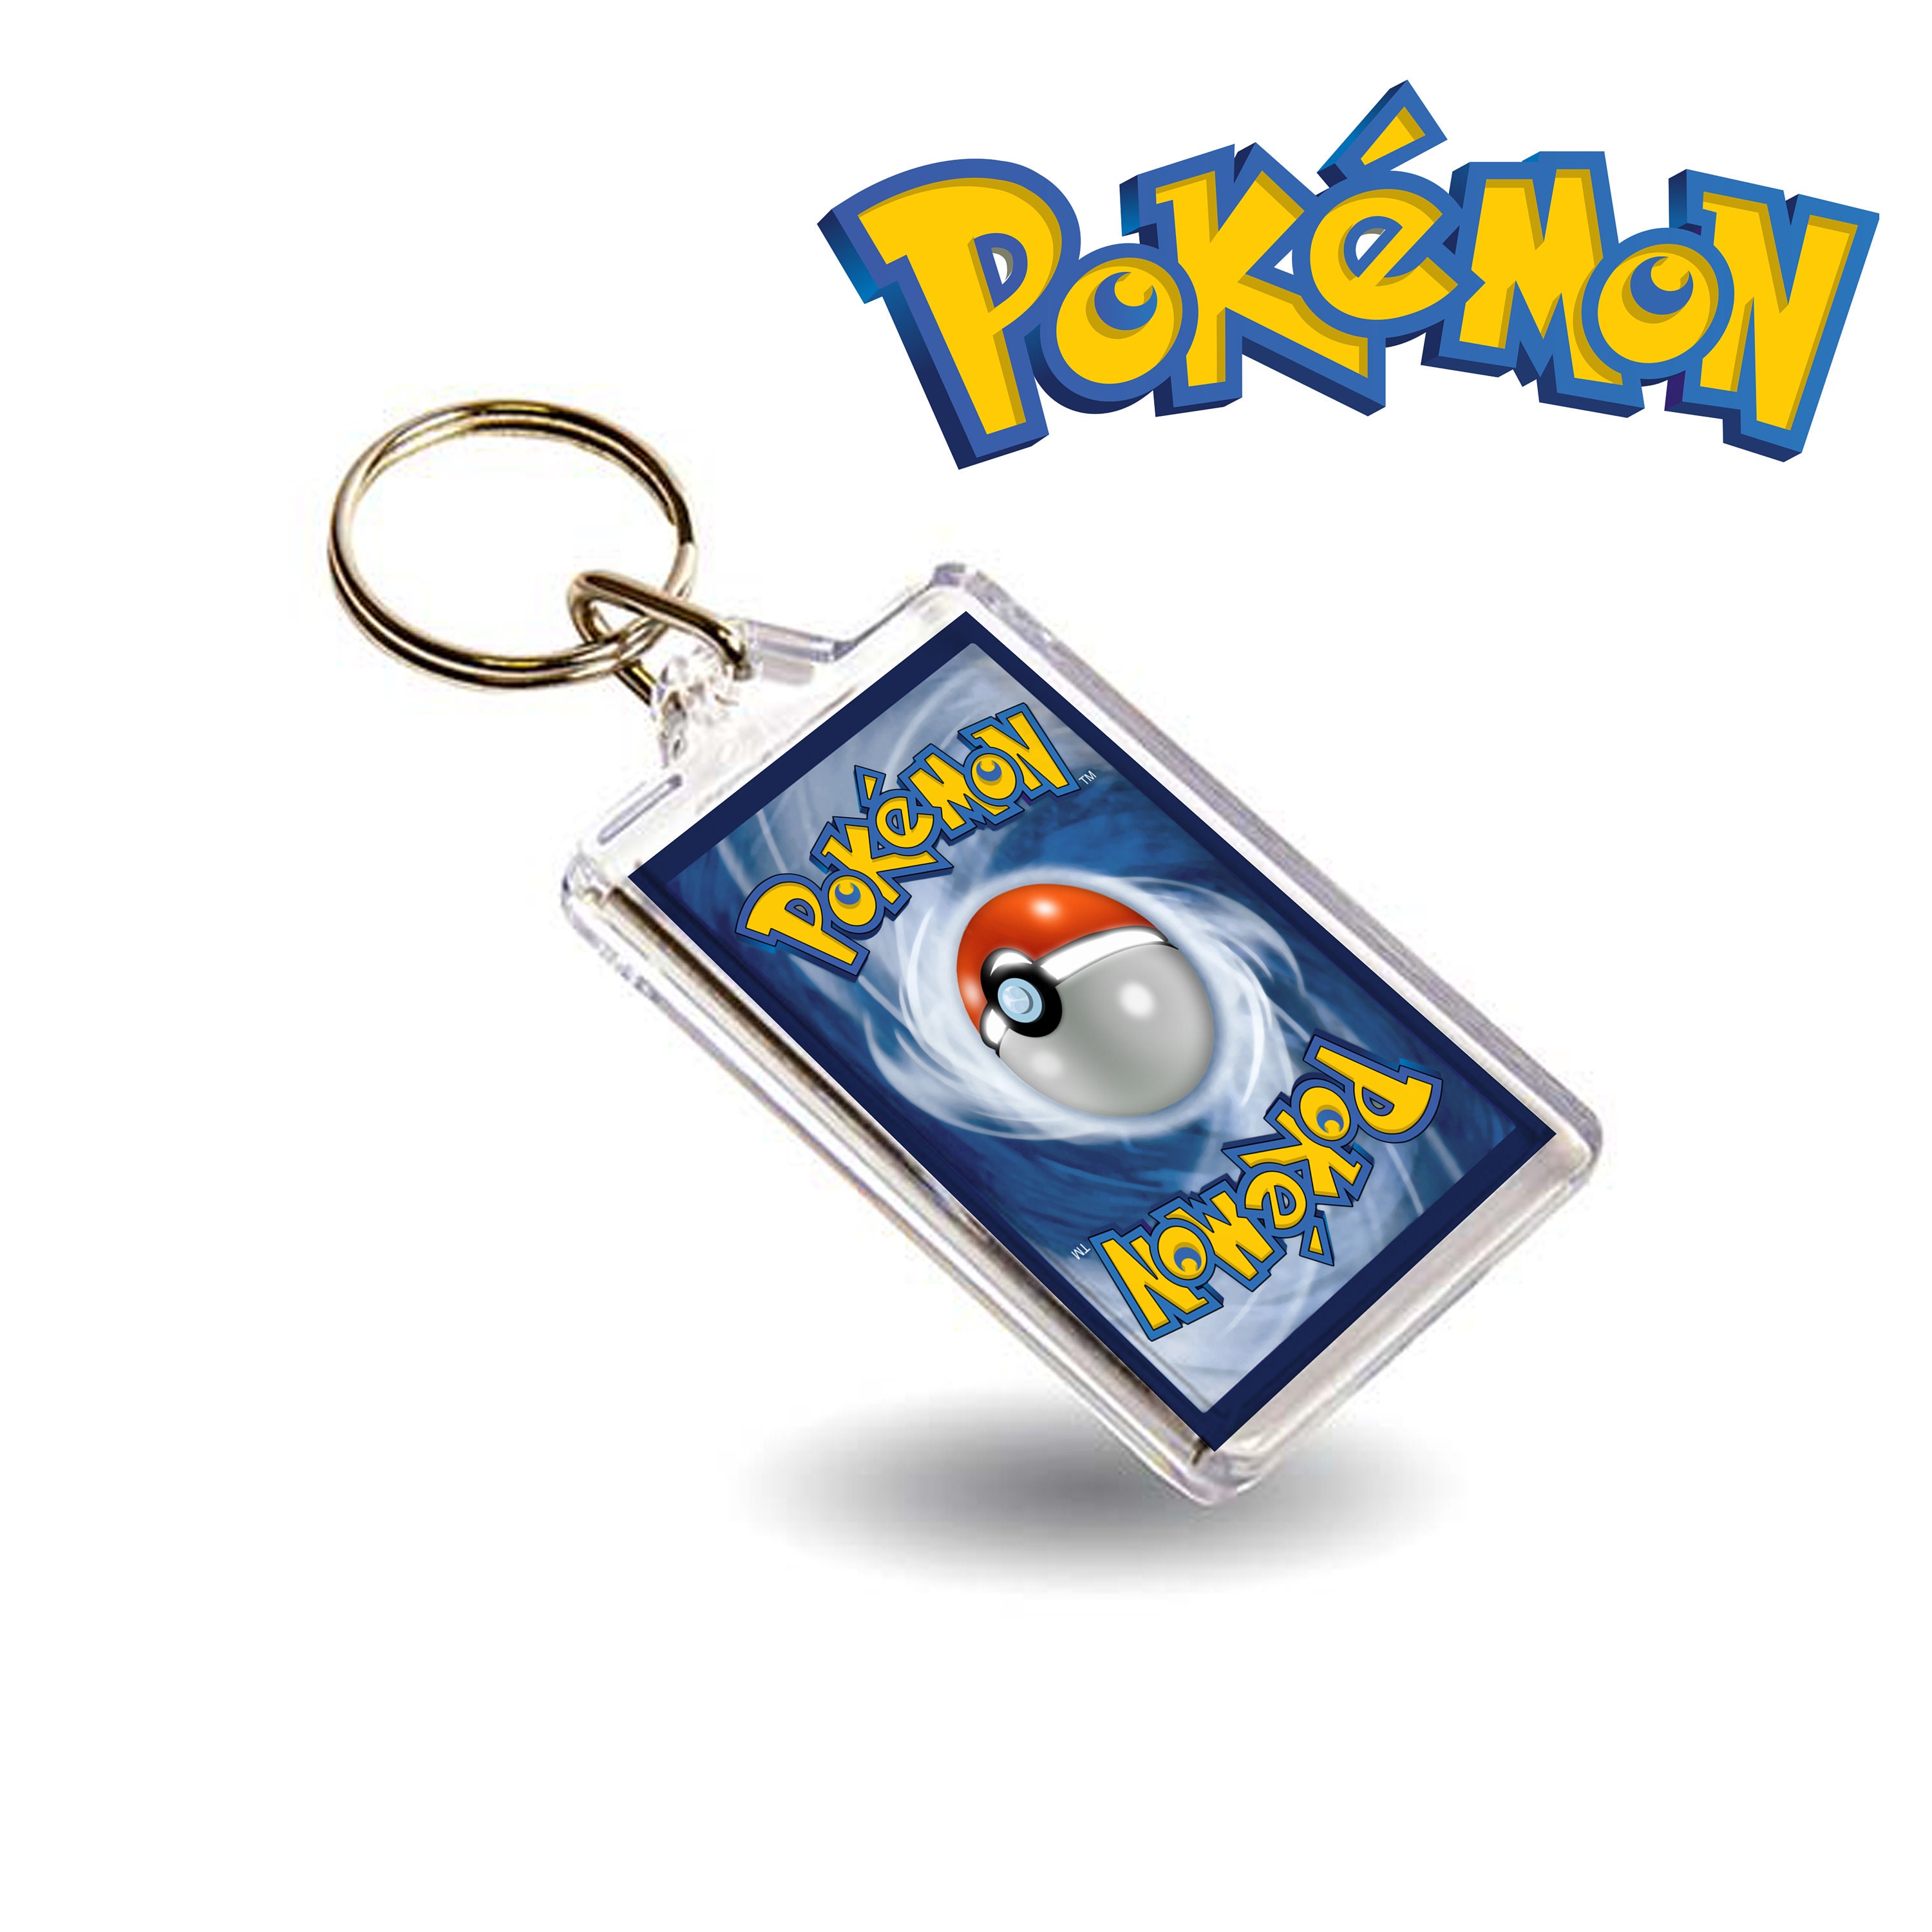 Onix Pokemon Card Style Key Ring / Key Chain Based on Original Pokemon Set  - Plastic, Double Sided